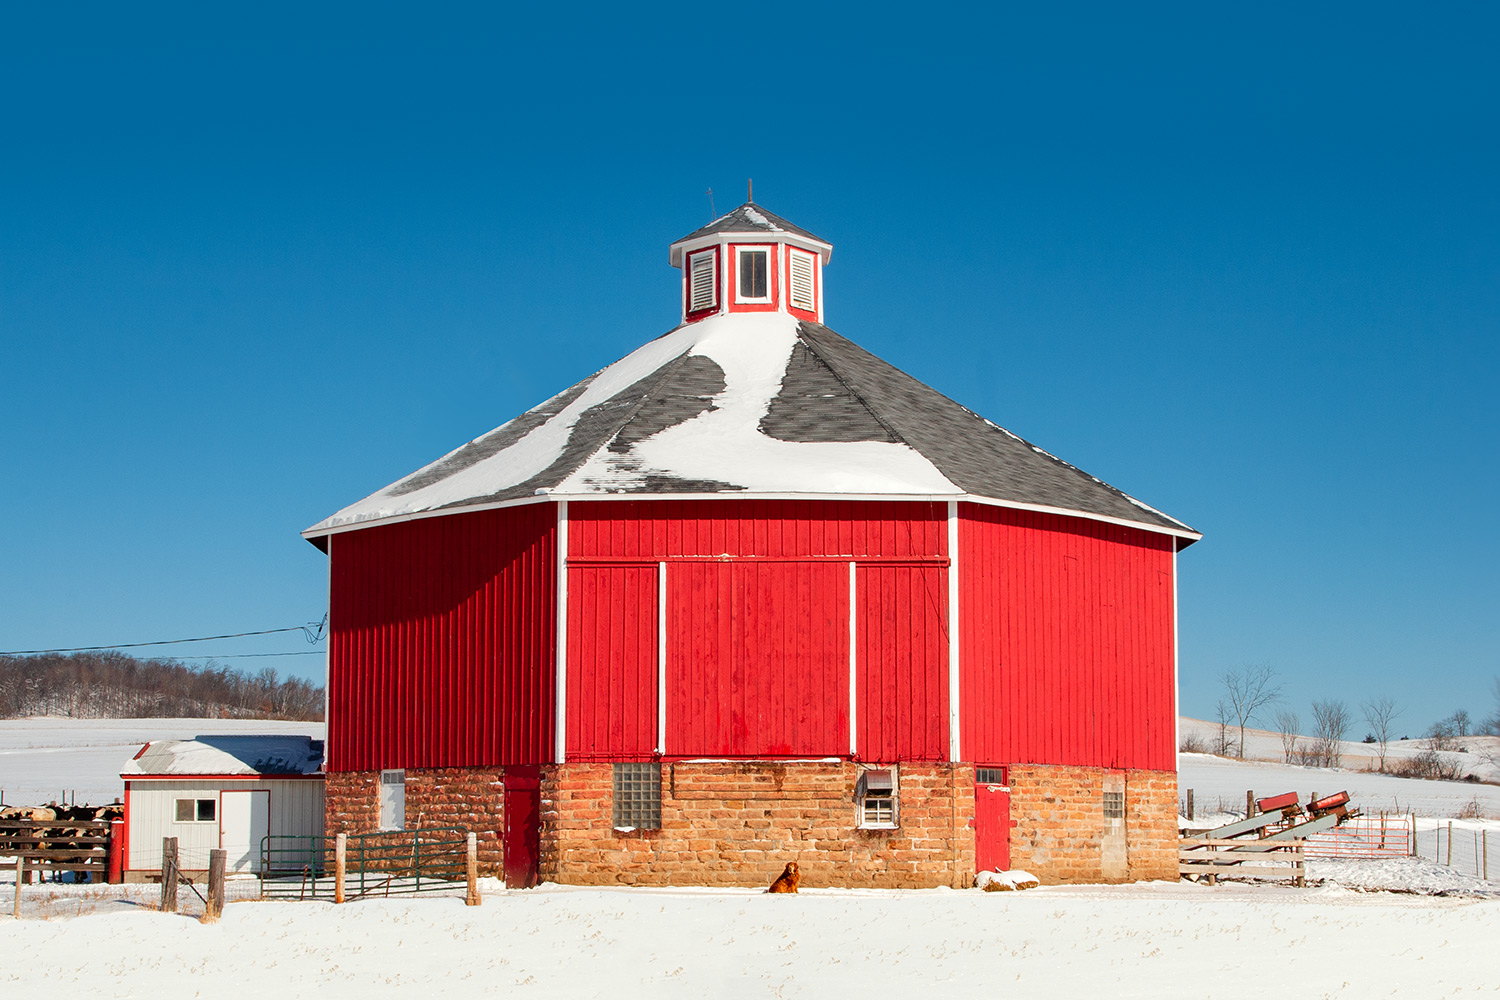 Round Barn on Snow